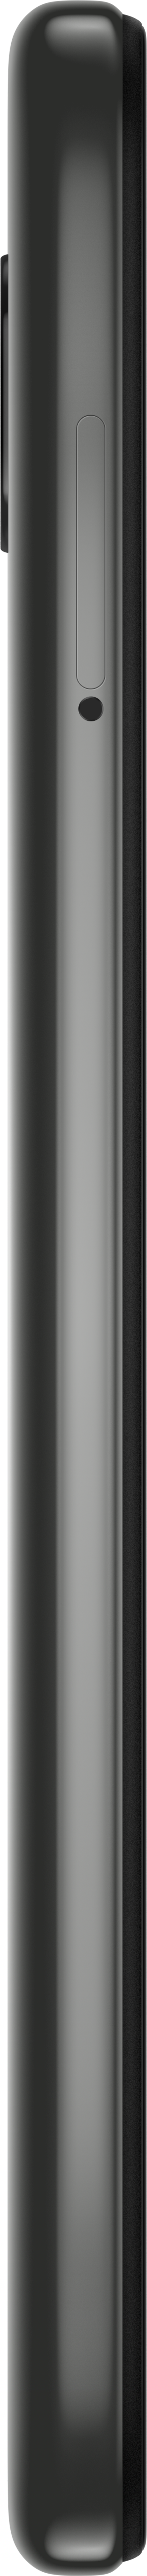 XIAOMI REDMI 8 64GB+4GB ONYX GB Dual Black 64 Onyx SIM BLACK